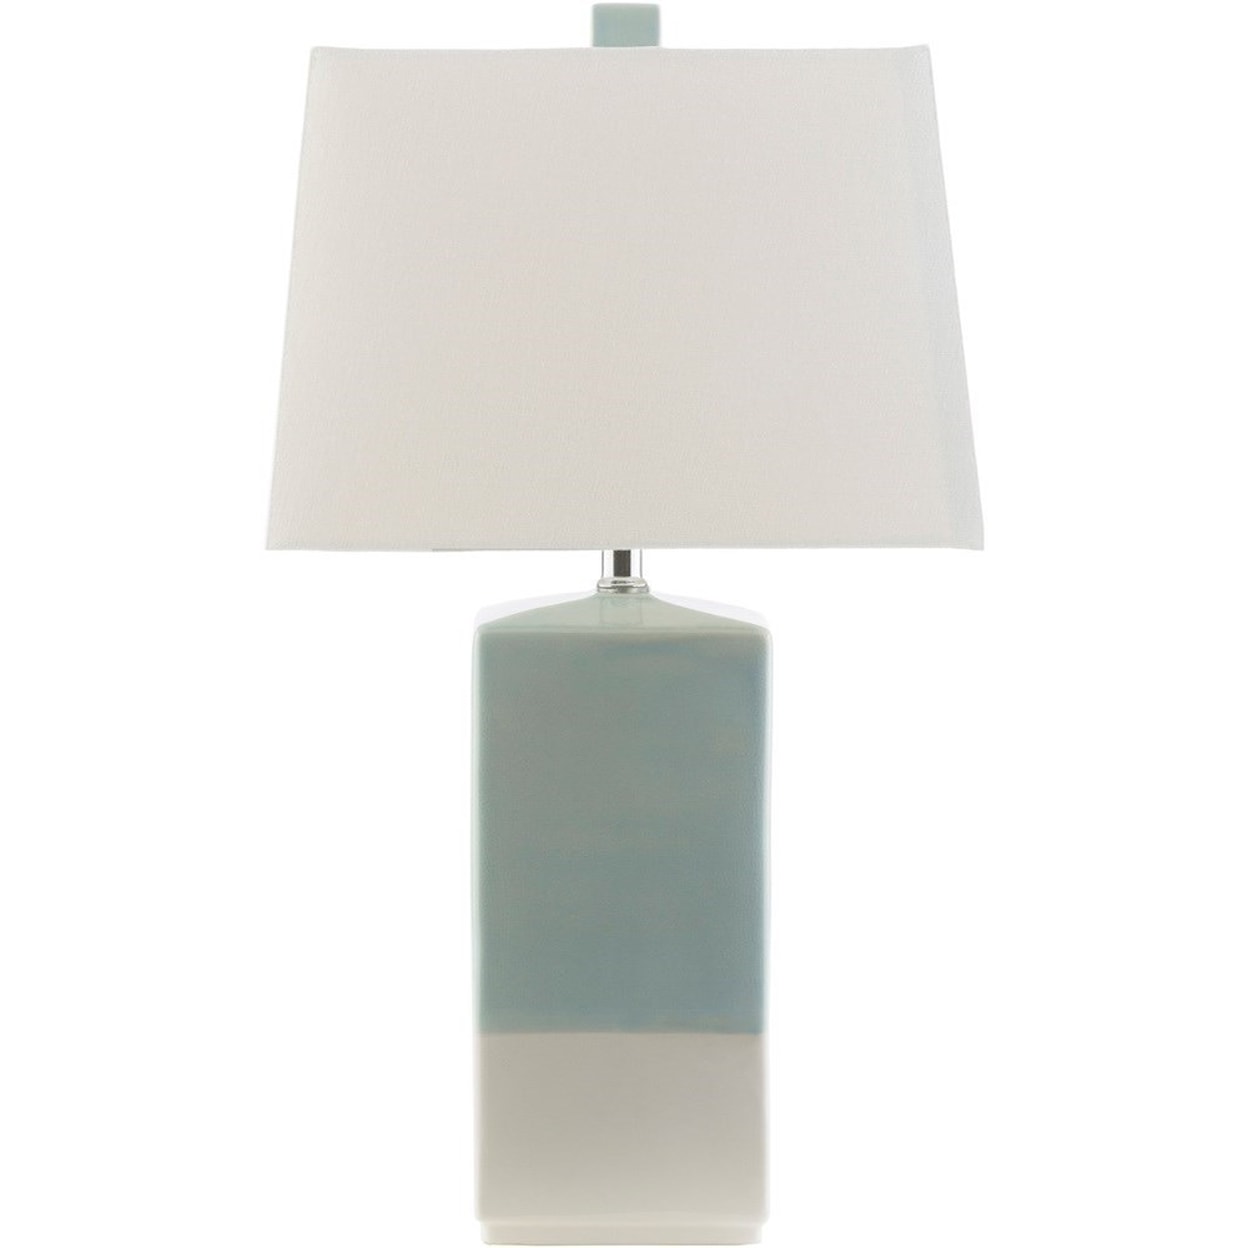 Surya Malloy Blue / White Coastal Table Lamp